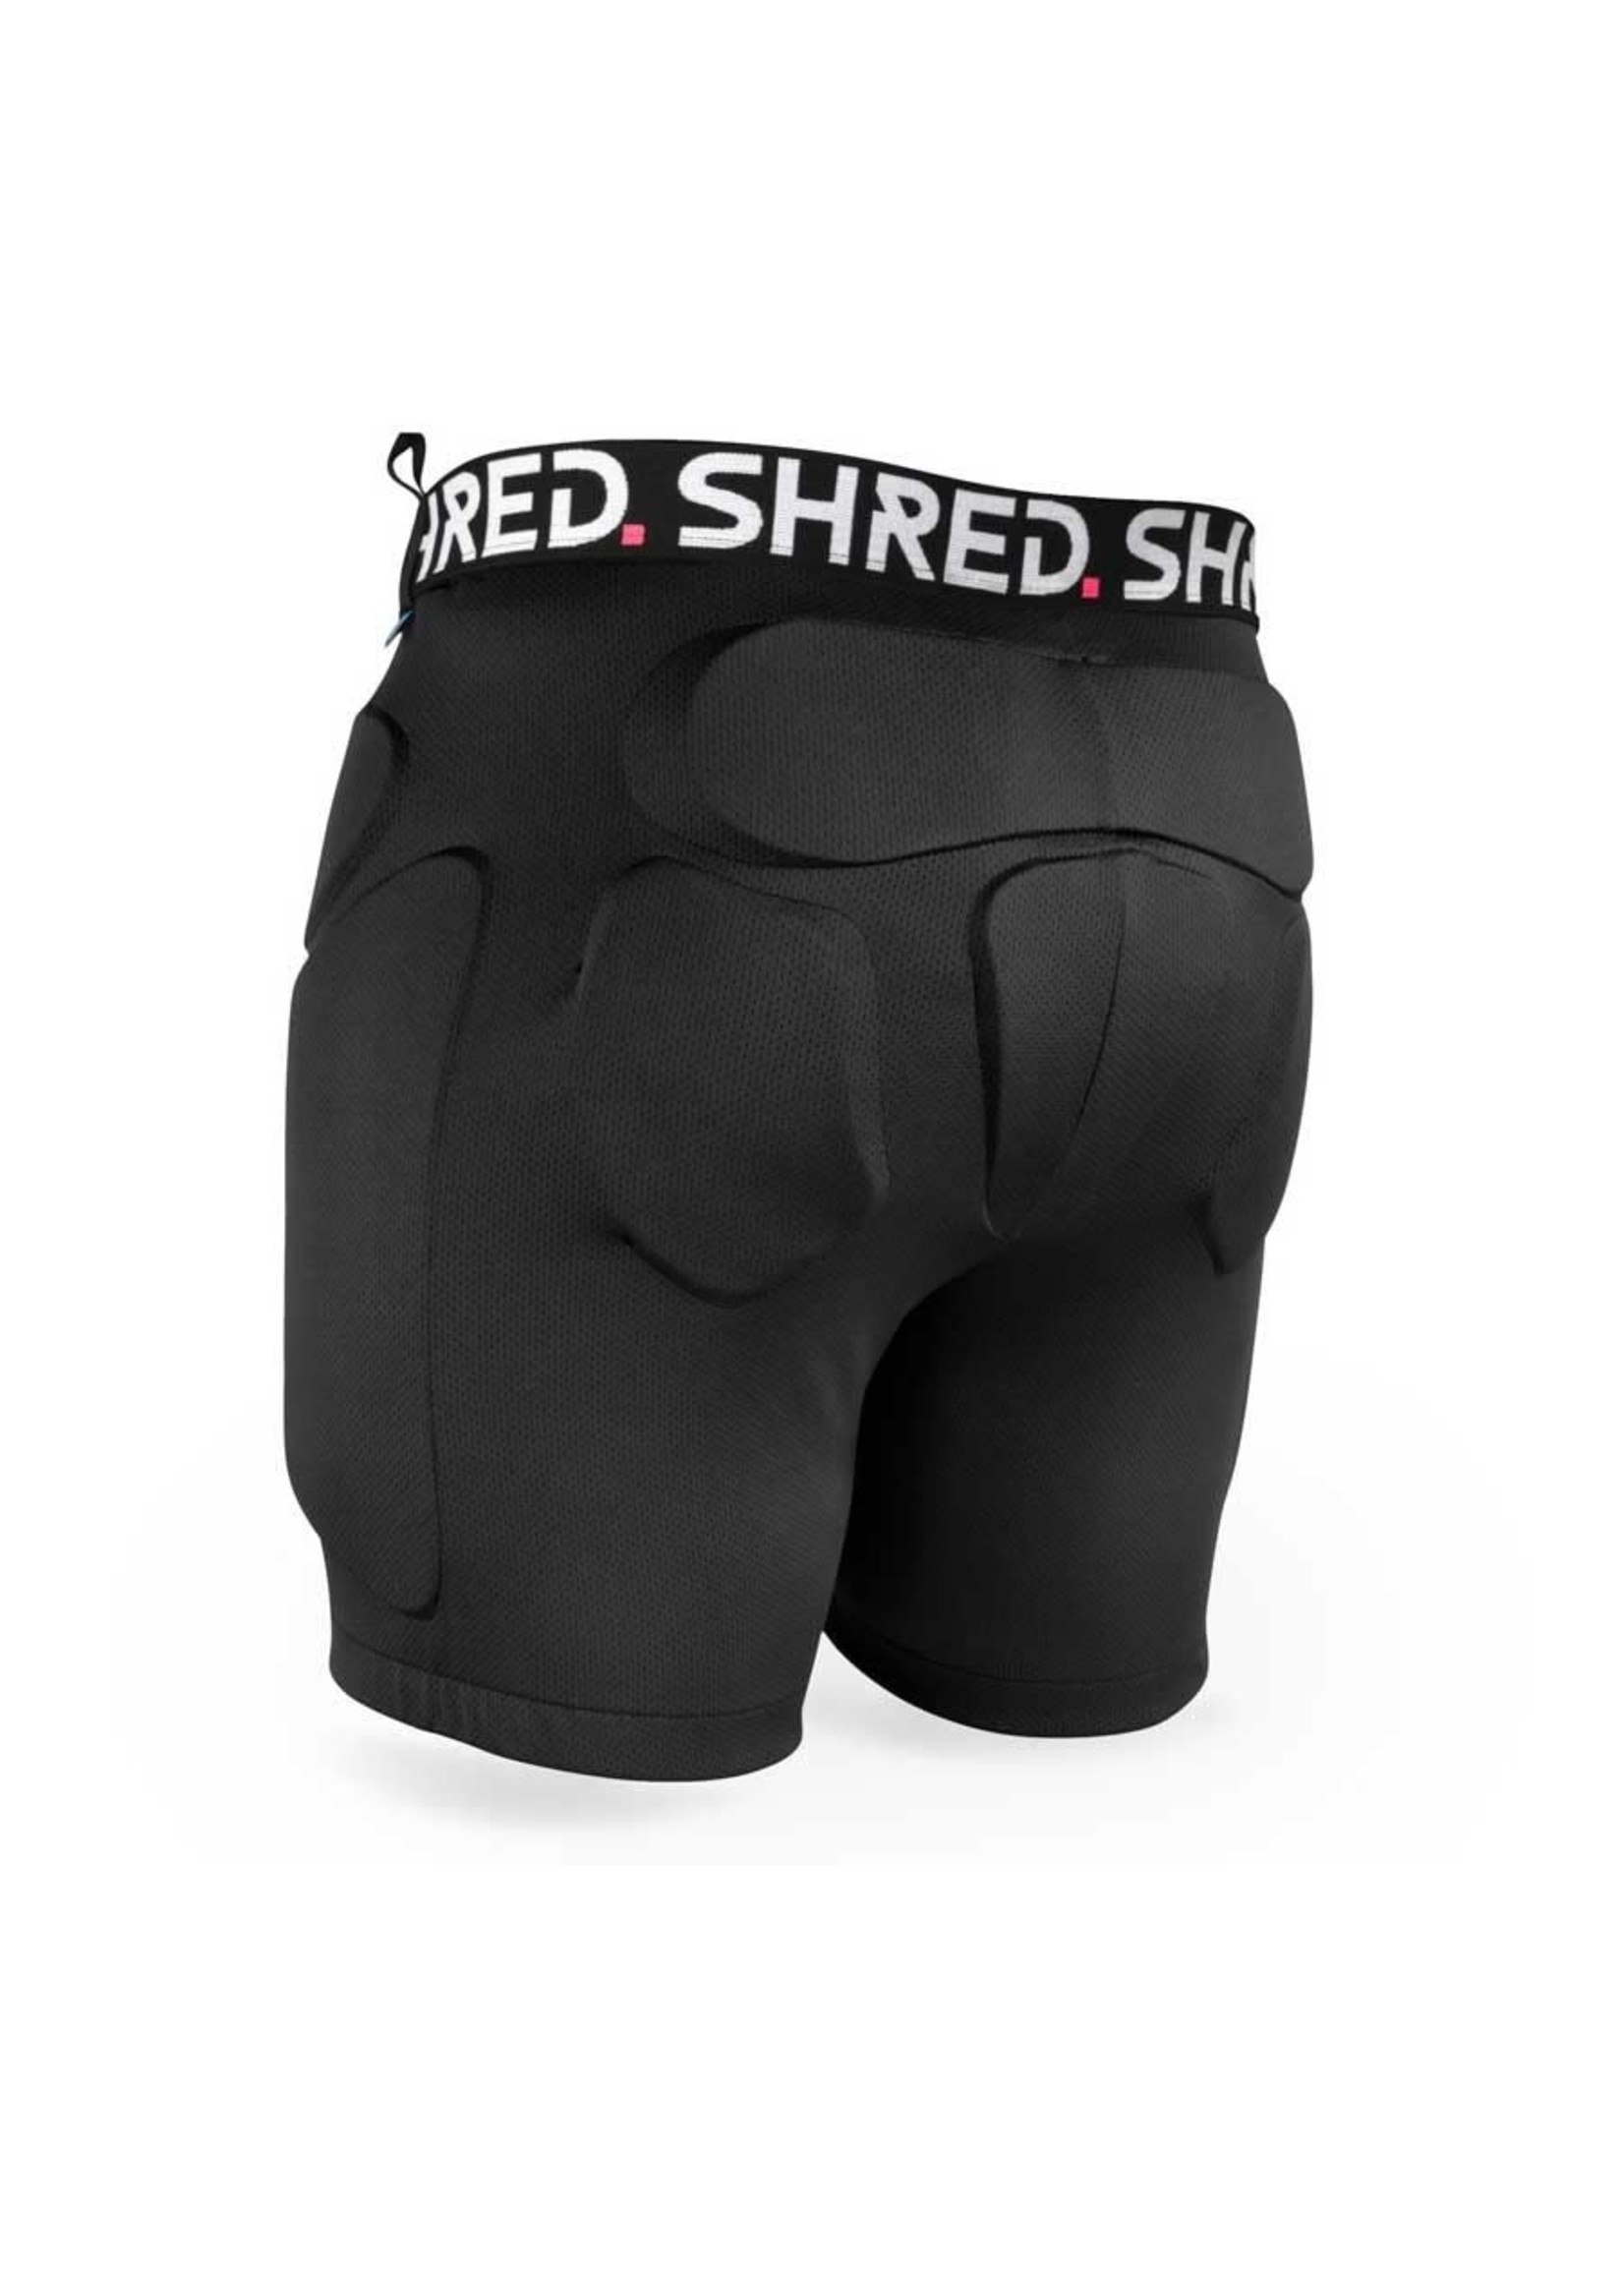 Shred PROTECTIVE SHORTS